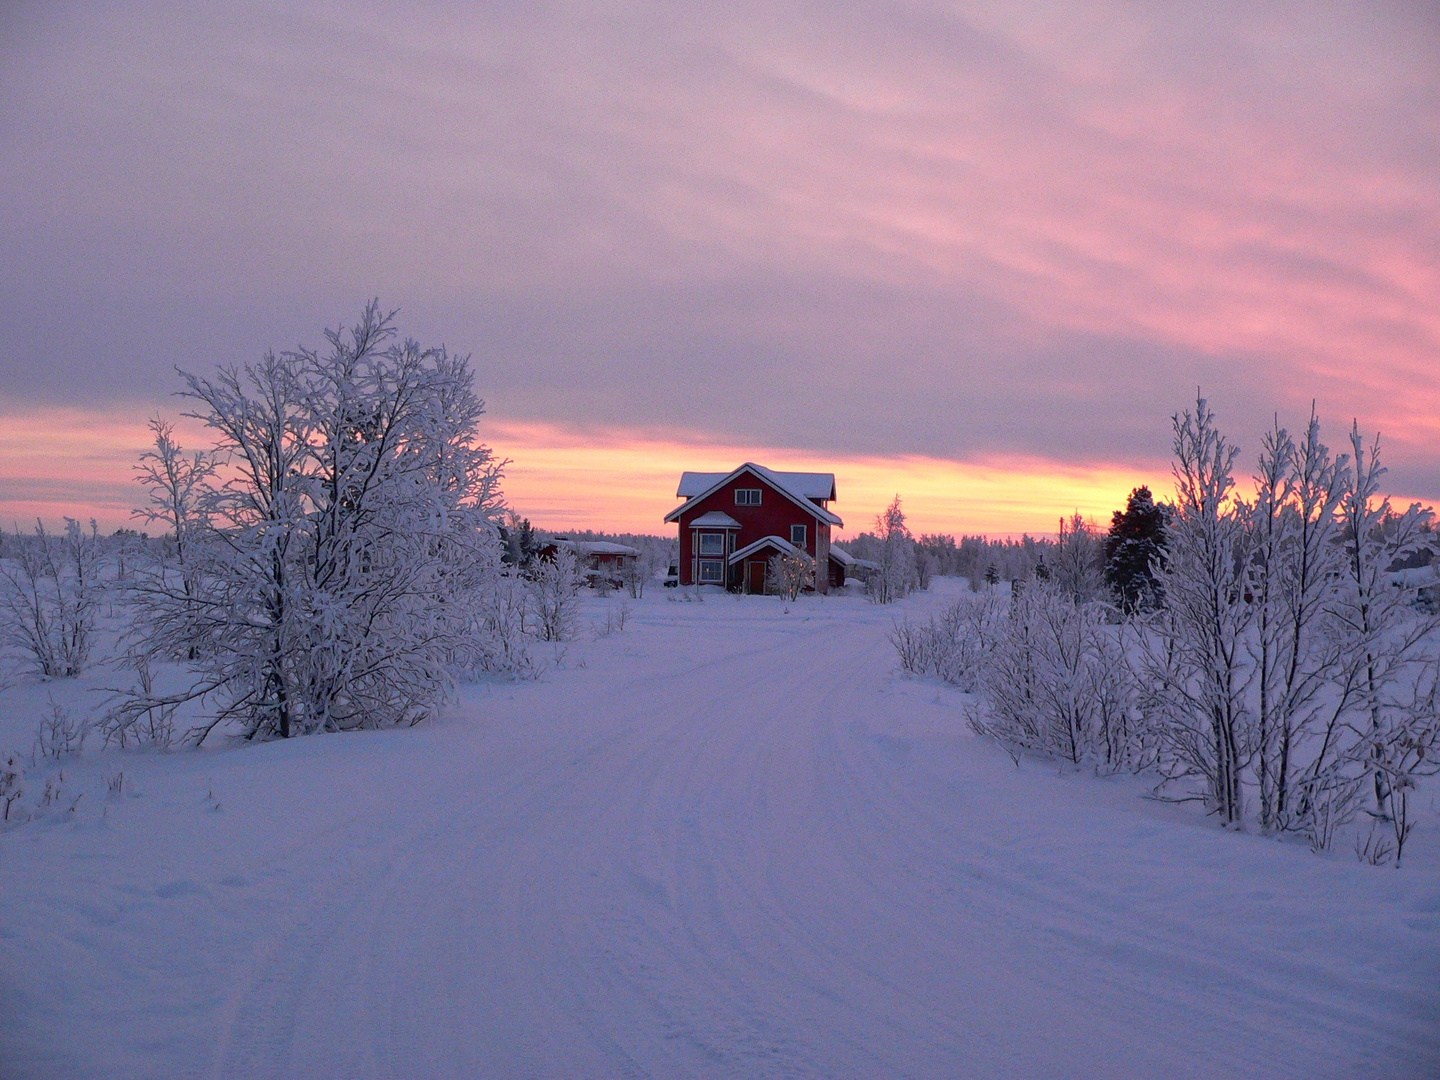 Wintertraum in Finnland